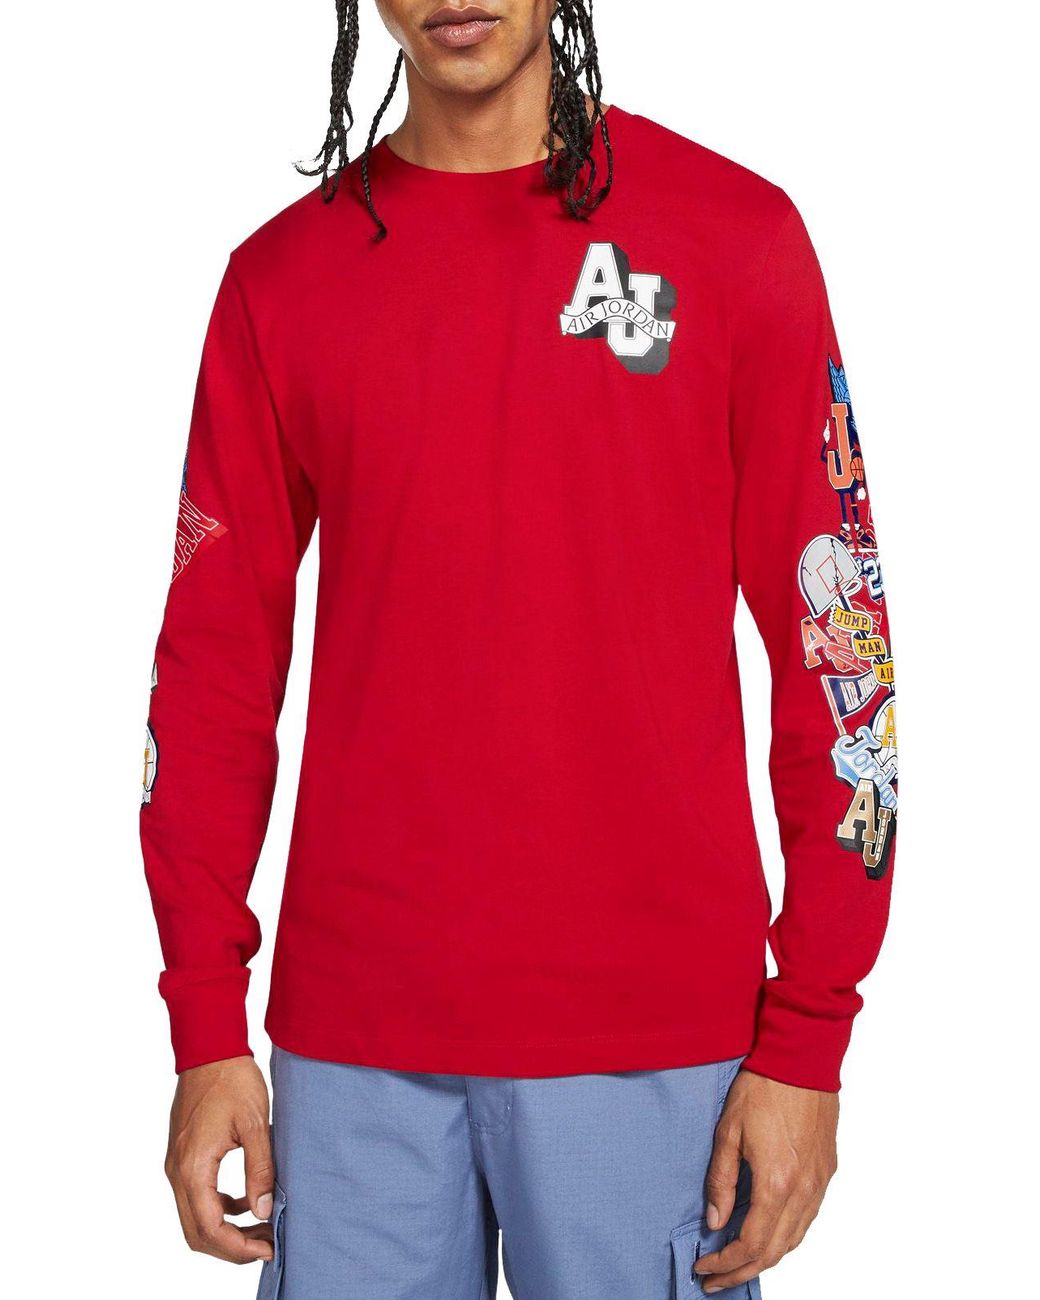 Nike Cotton Varsity Long Sleeve Shirt in Red for Men - Lyst